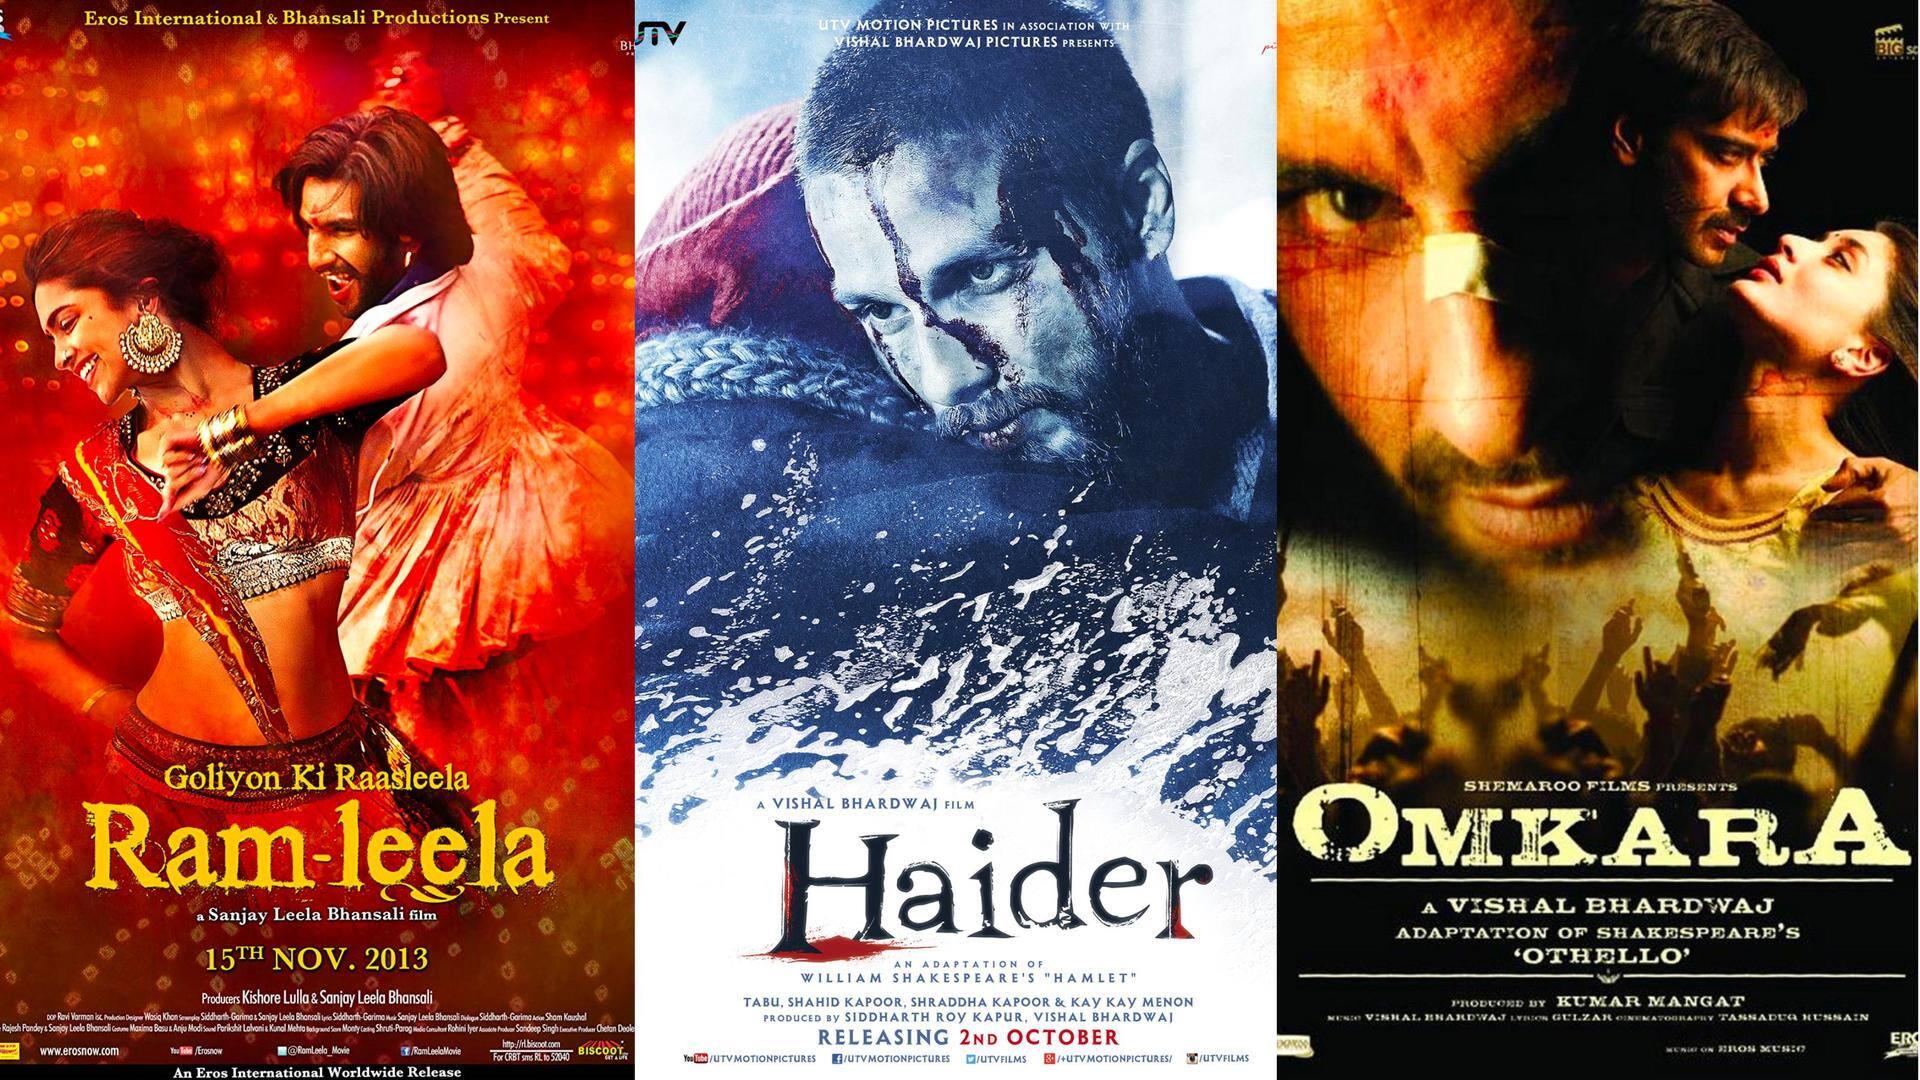 #NewsBytesExplainer: How Bollywood has paid homage to playwright William Shakespeare